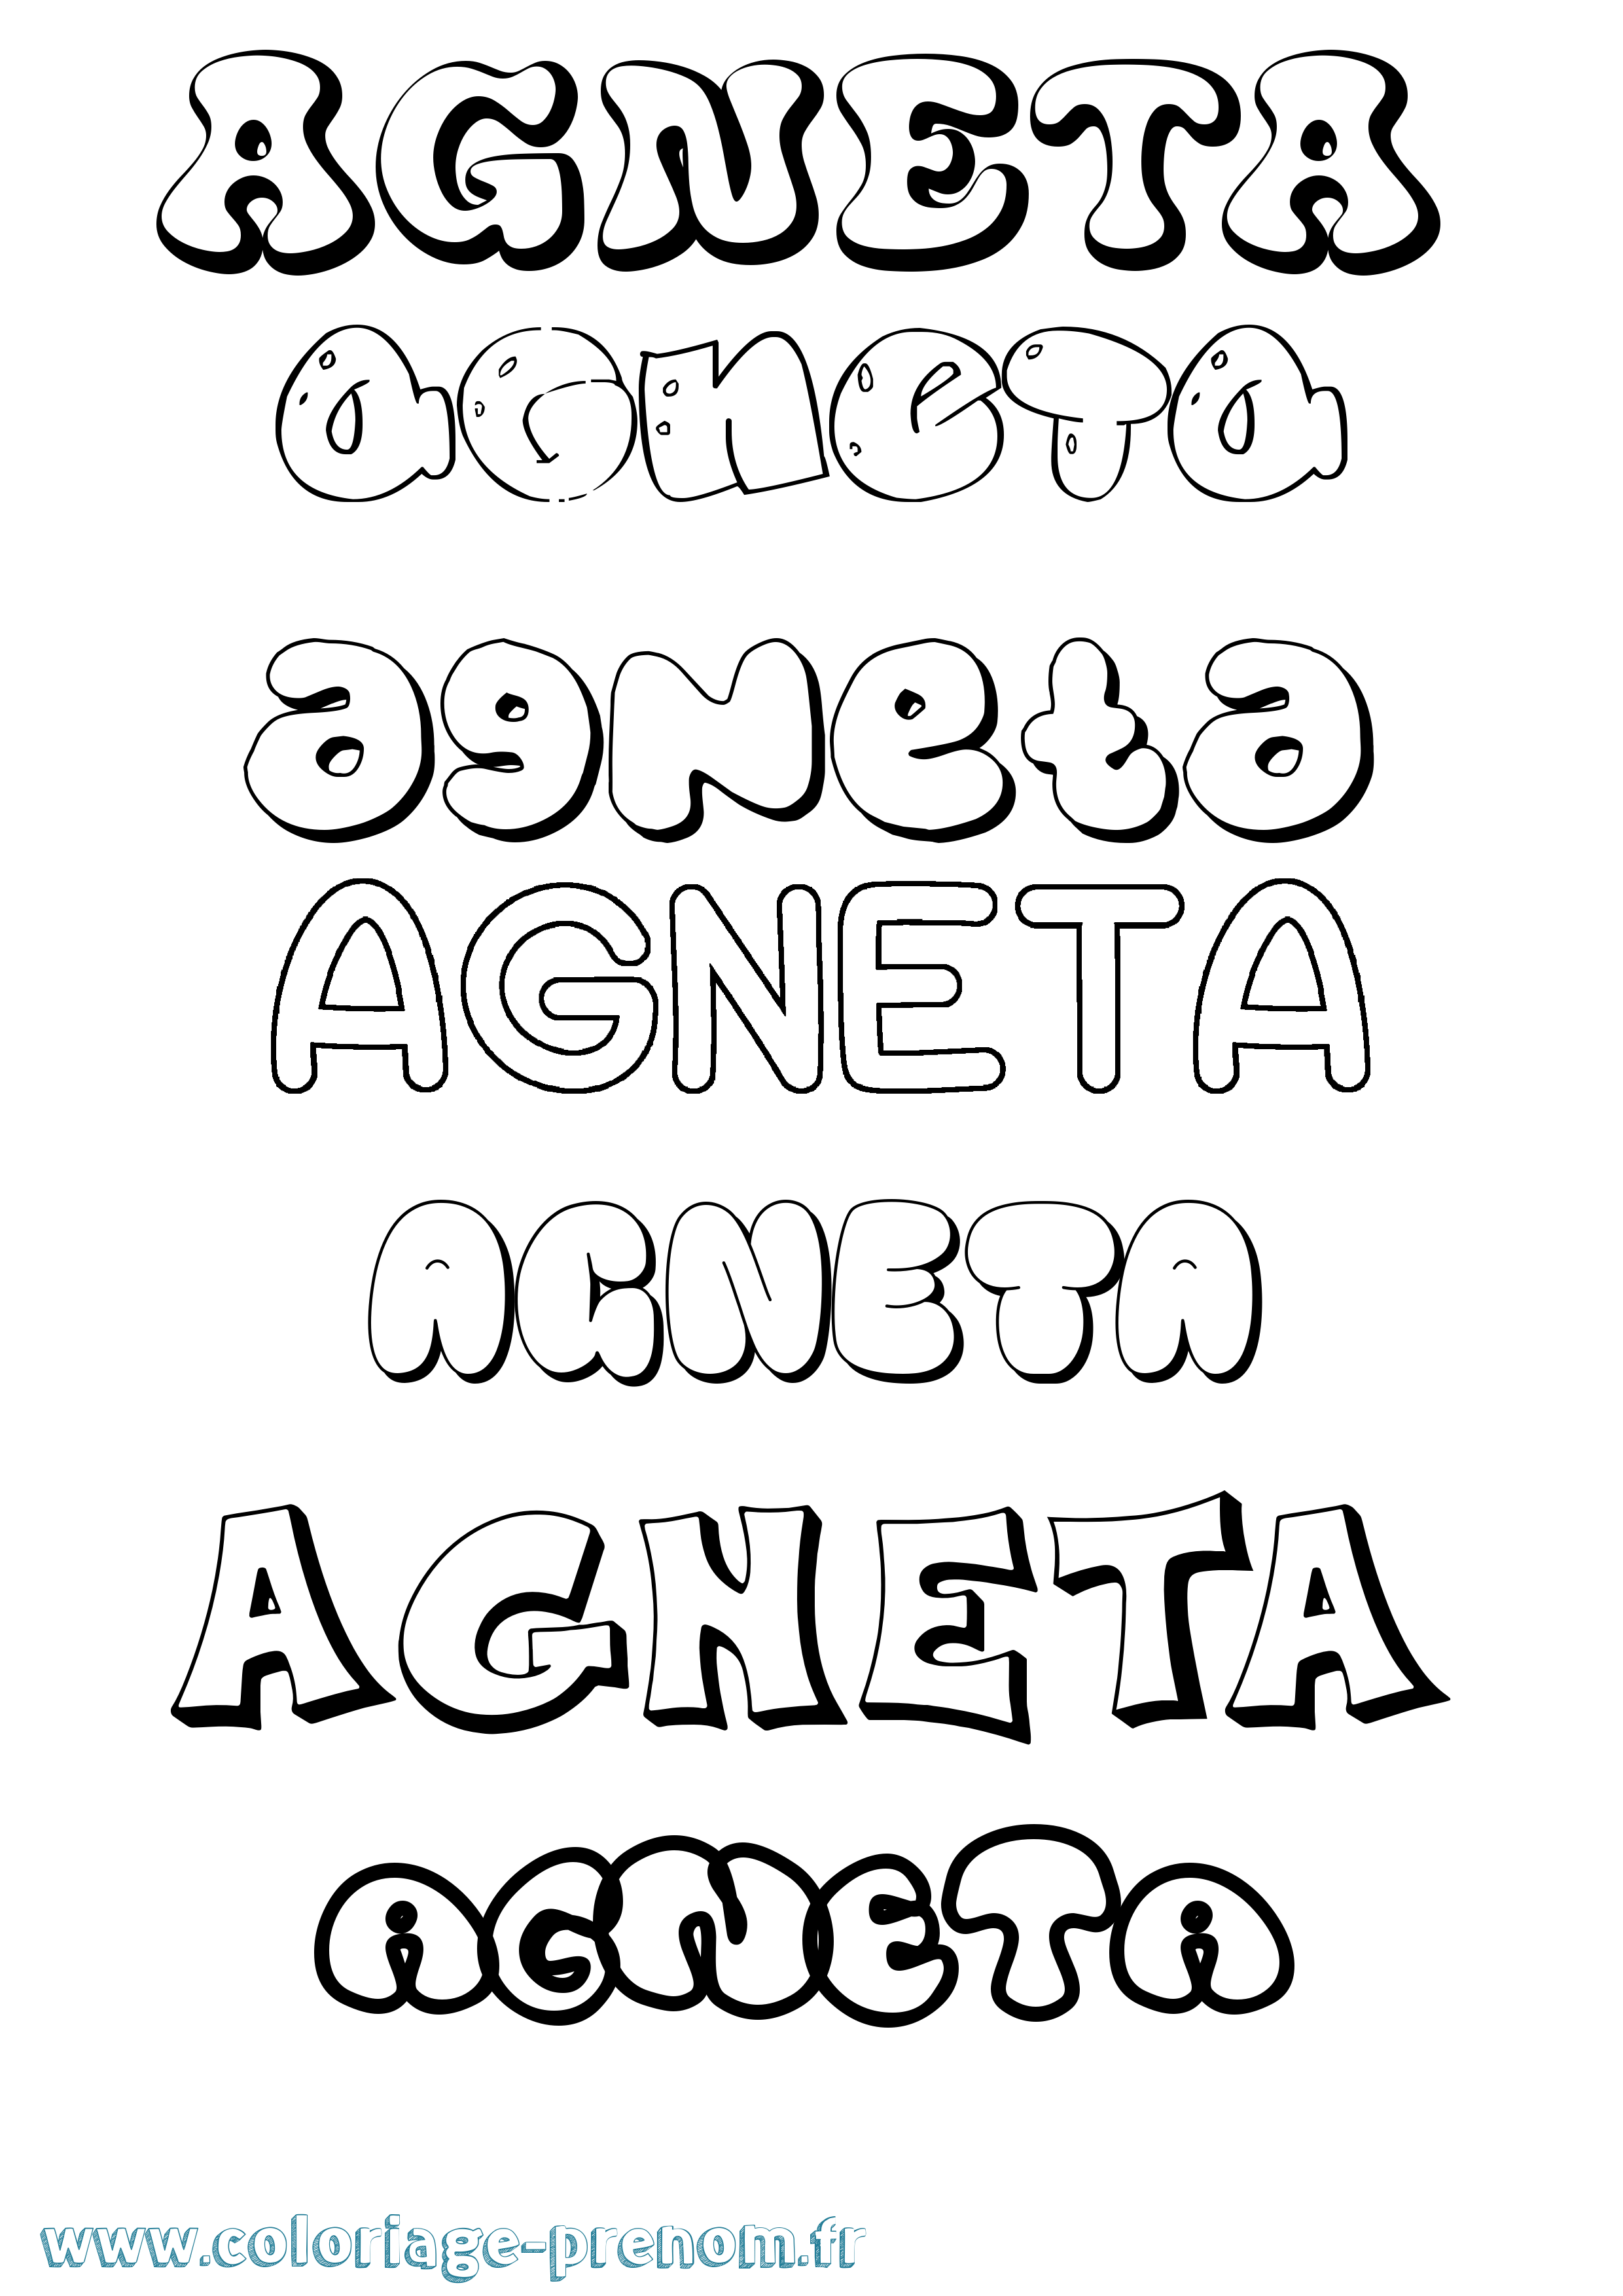 Coloriage prénom Agneta Bubble